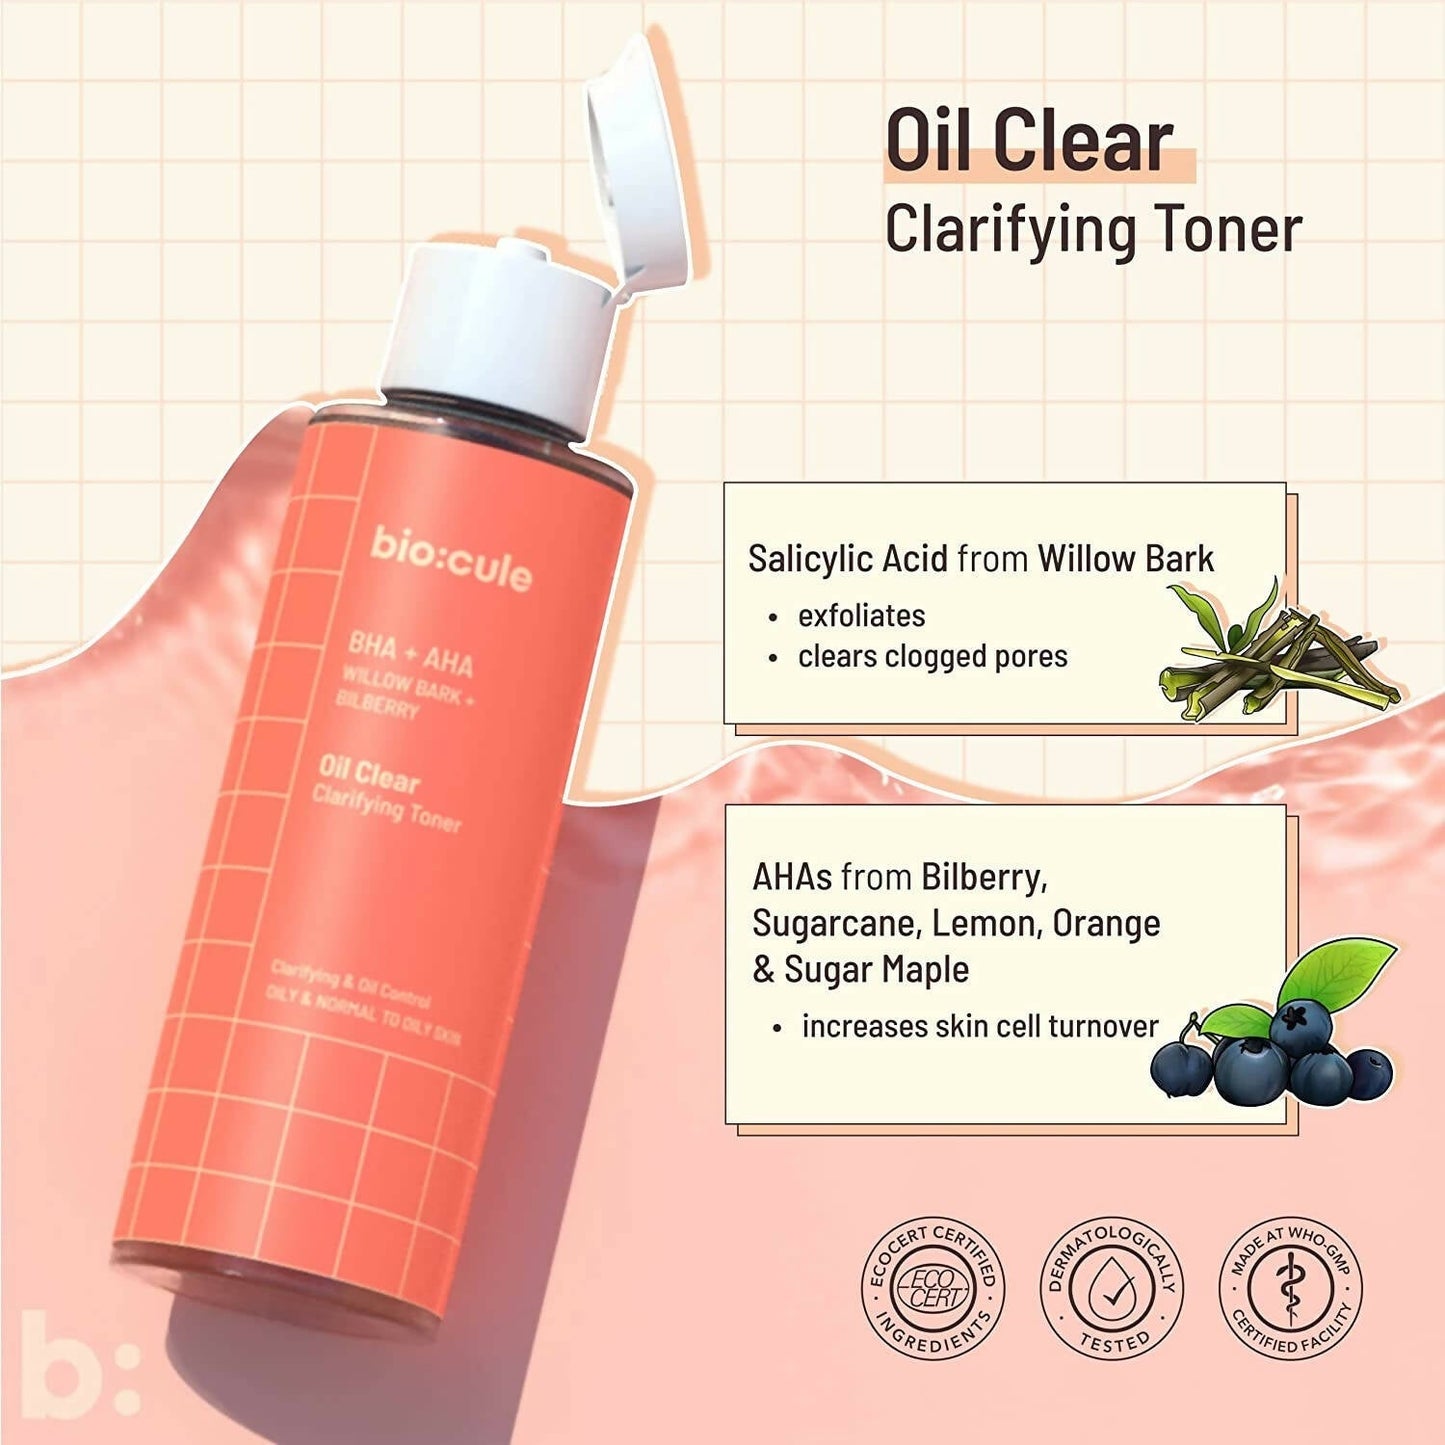 Biocule Oil Clear Clarifying Toner